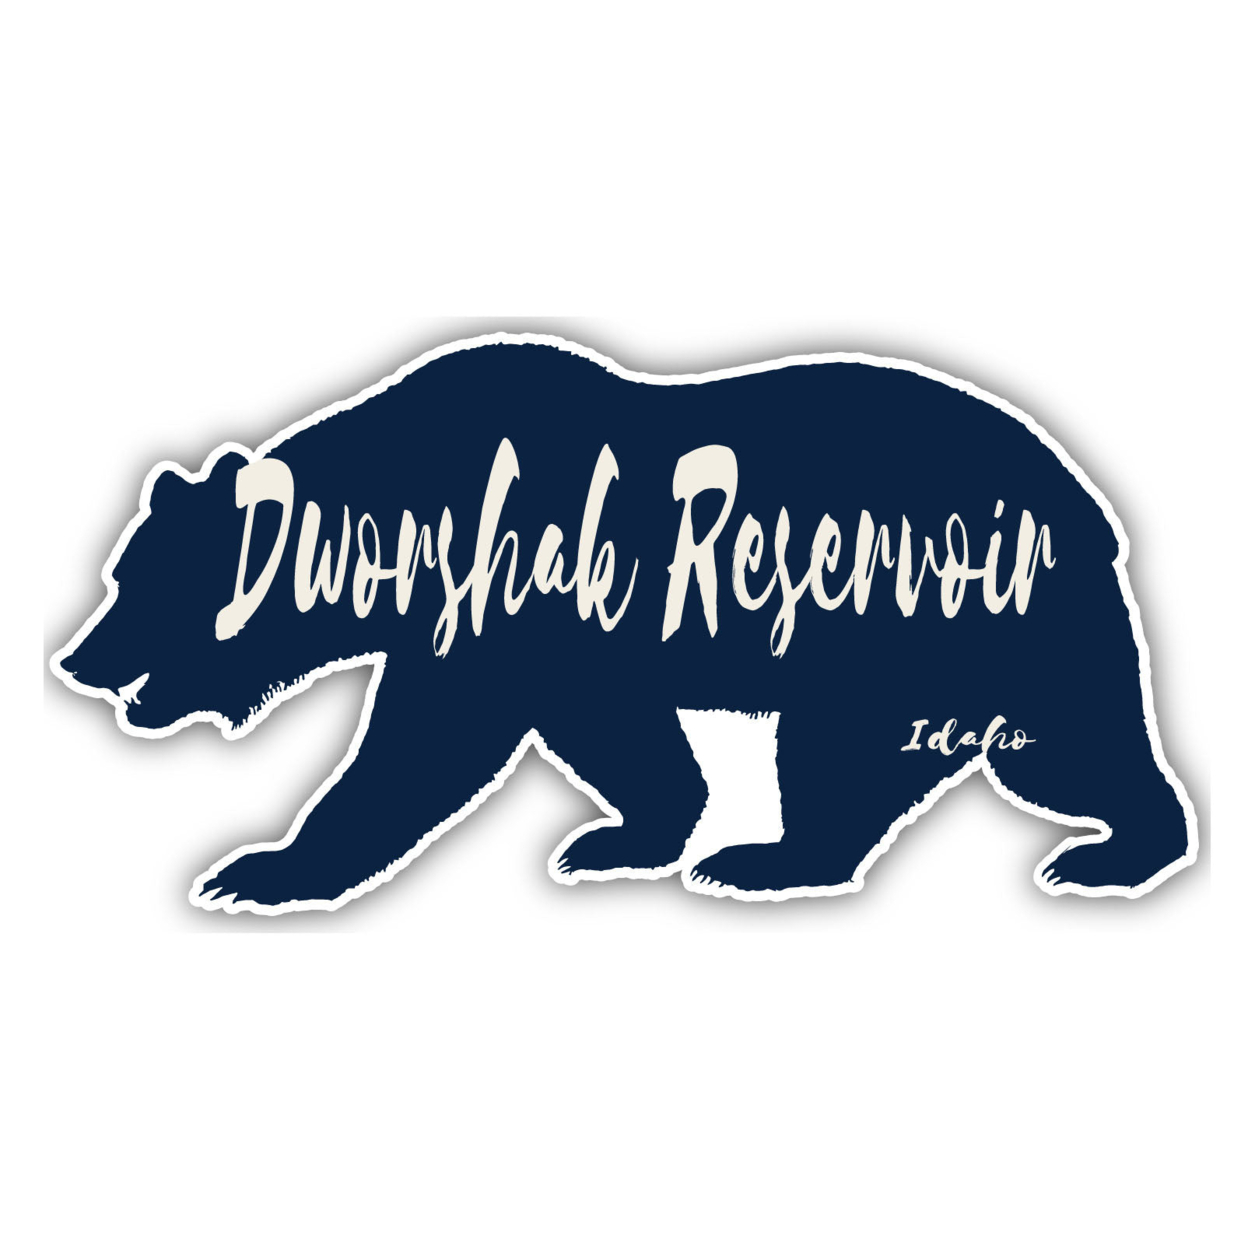 Dworshak Reservoir Idaho Souvenir Decorative Stickers (Choose Theme And Size) - 4-Pack, 12-Inch, Camp Life